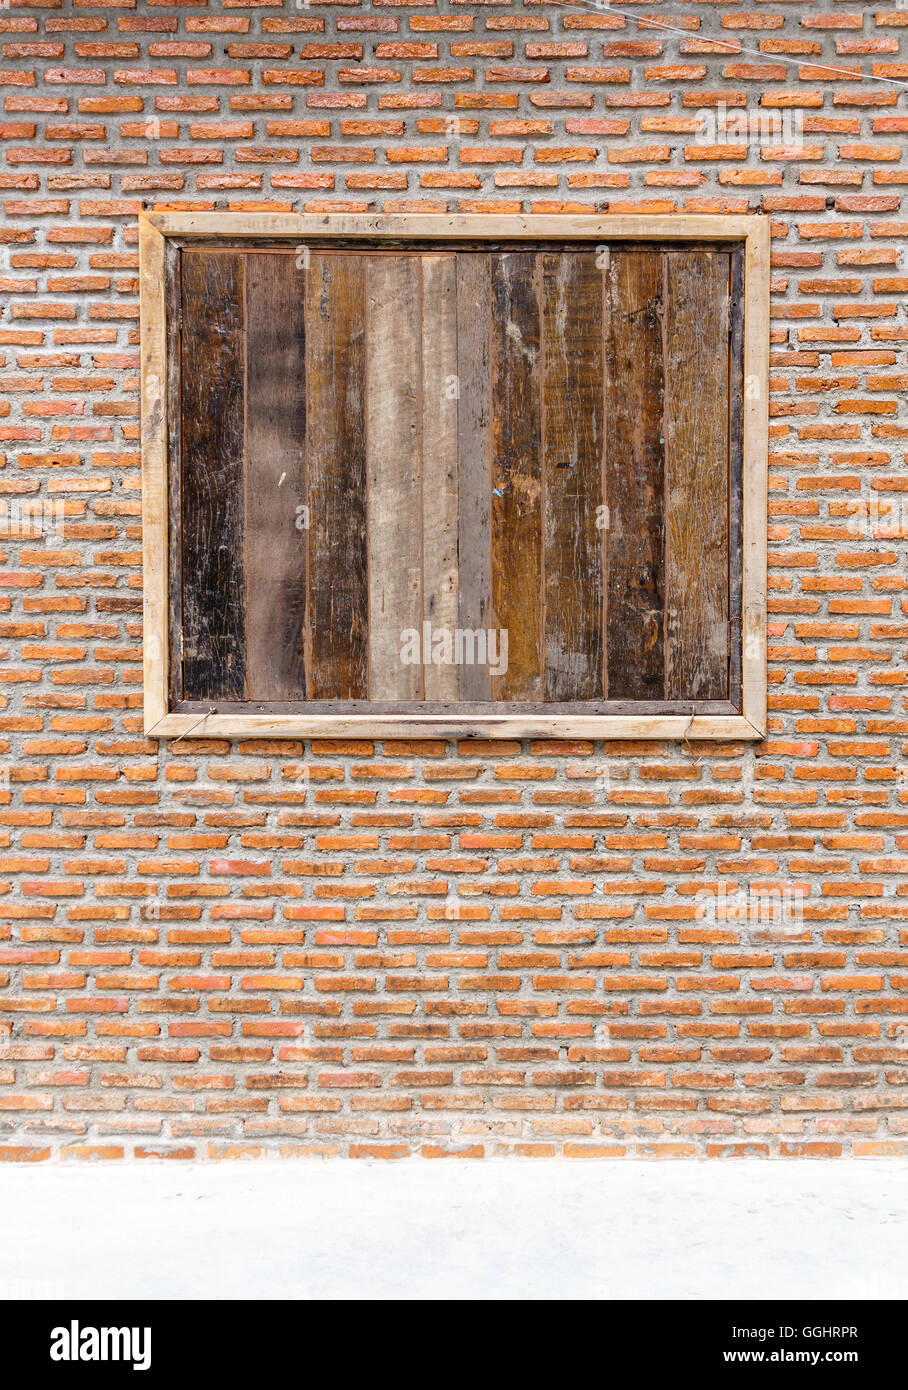 Grunge wood window on orange brick wall background texture Stock Photo